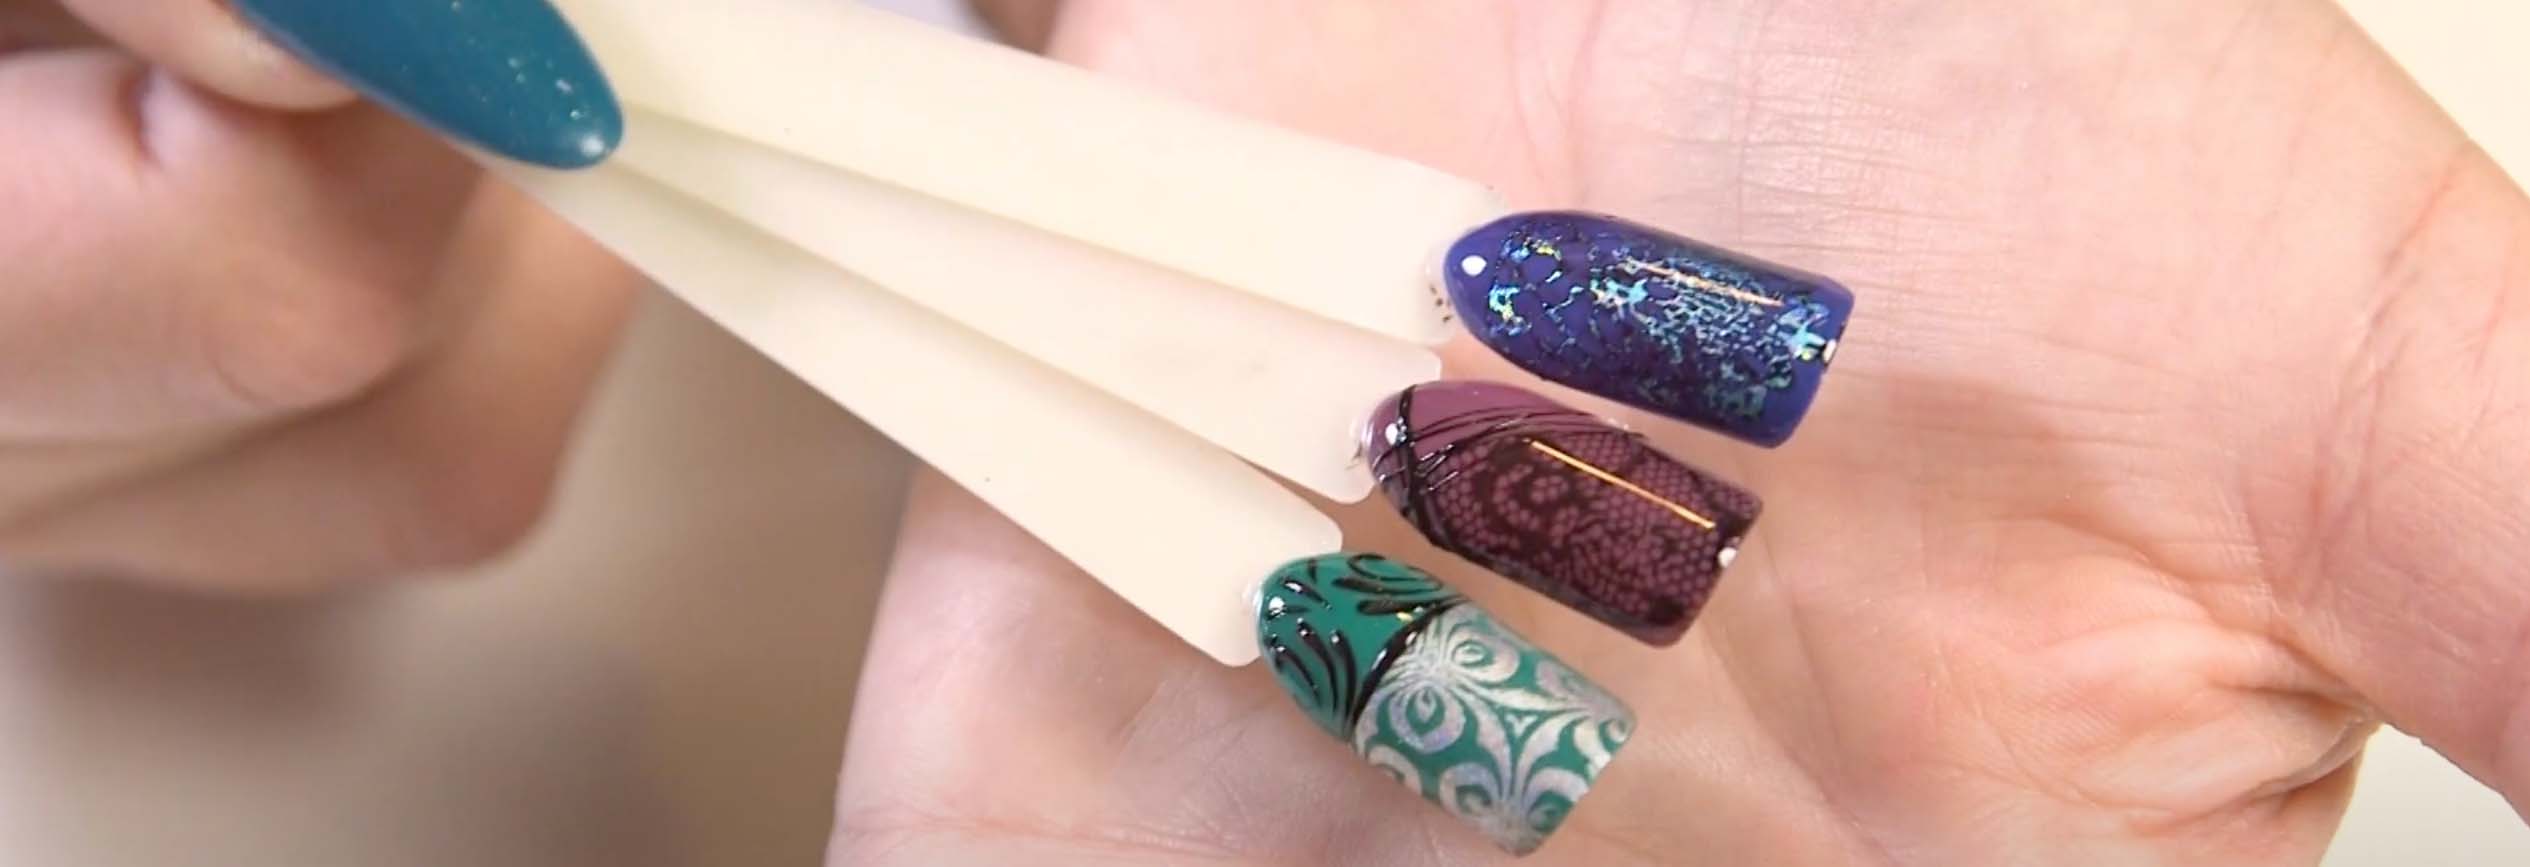 Nagels stempelen: 3 unieke nail stamping designs